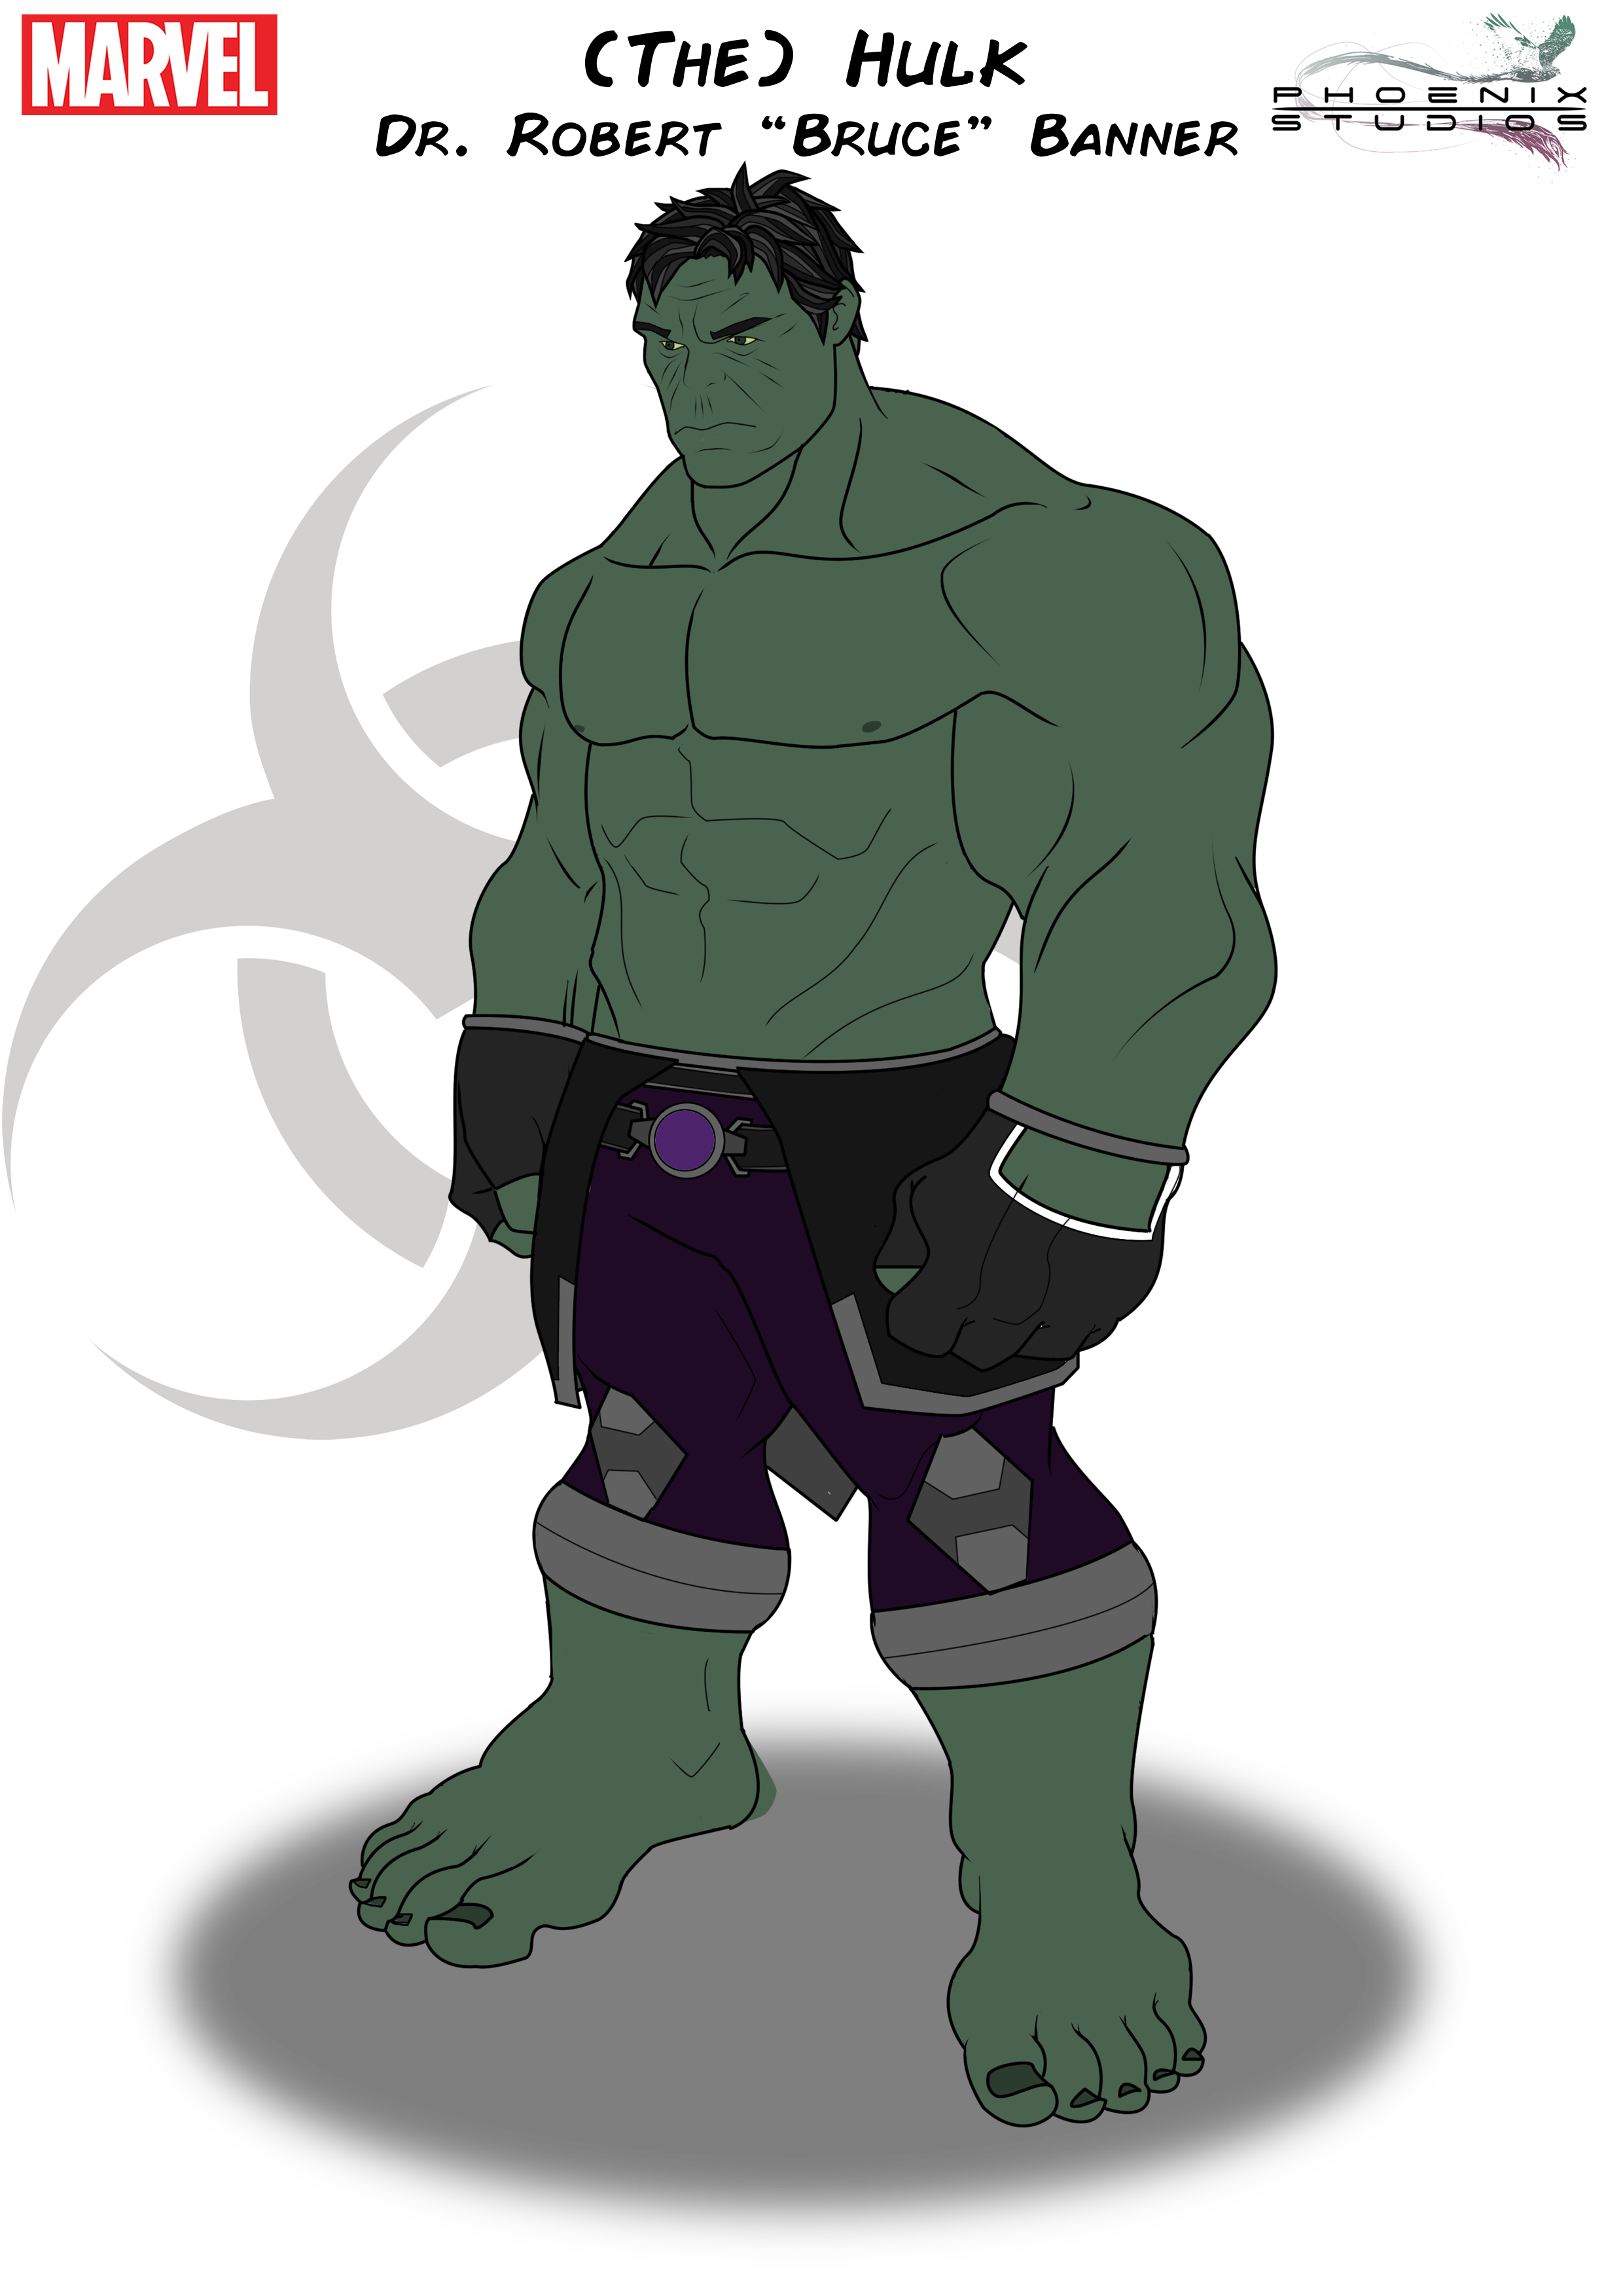 The Hulk from Thor Ragnarok (2017) by EmmaNettip on DeviantArt